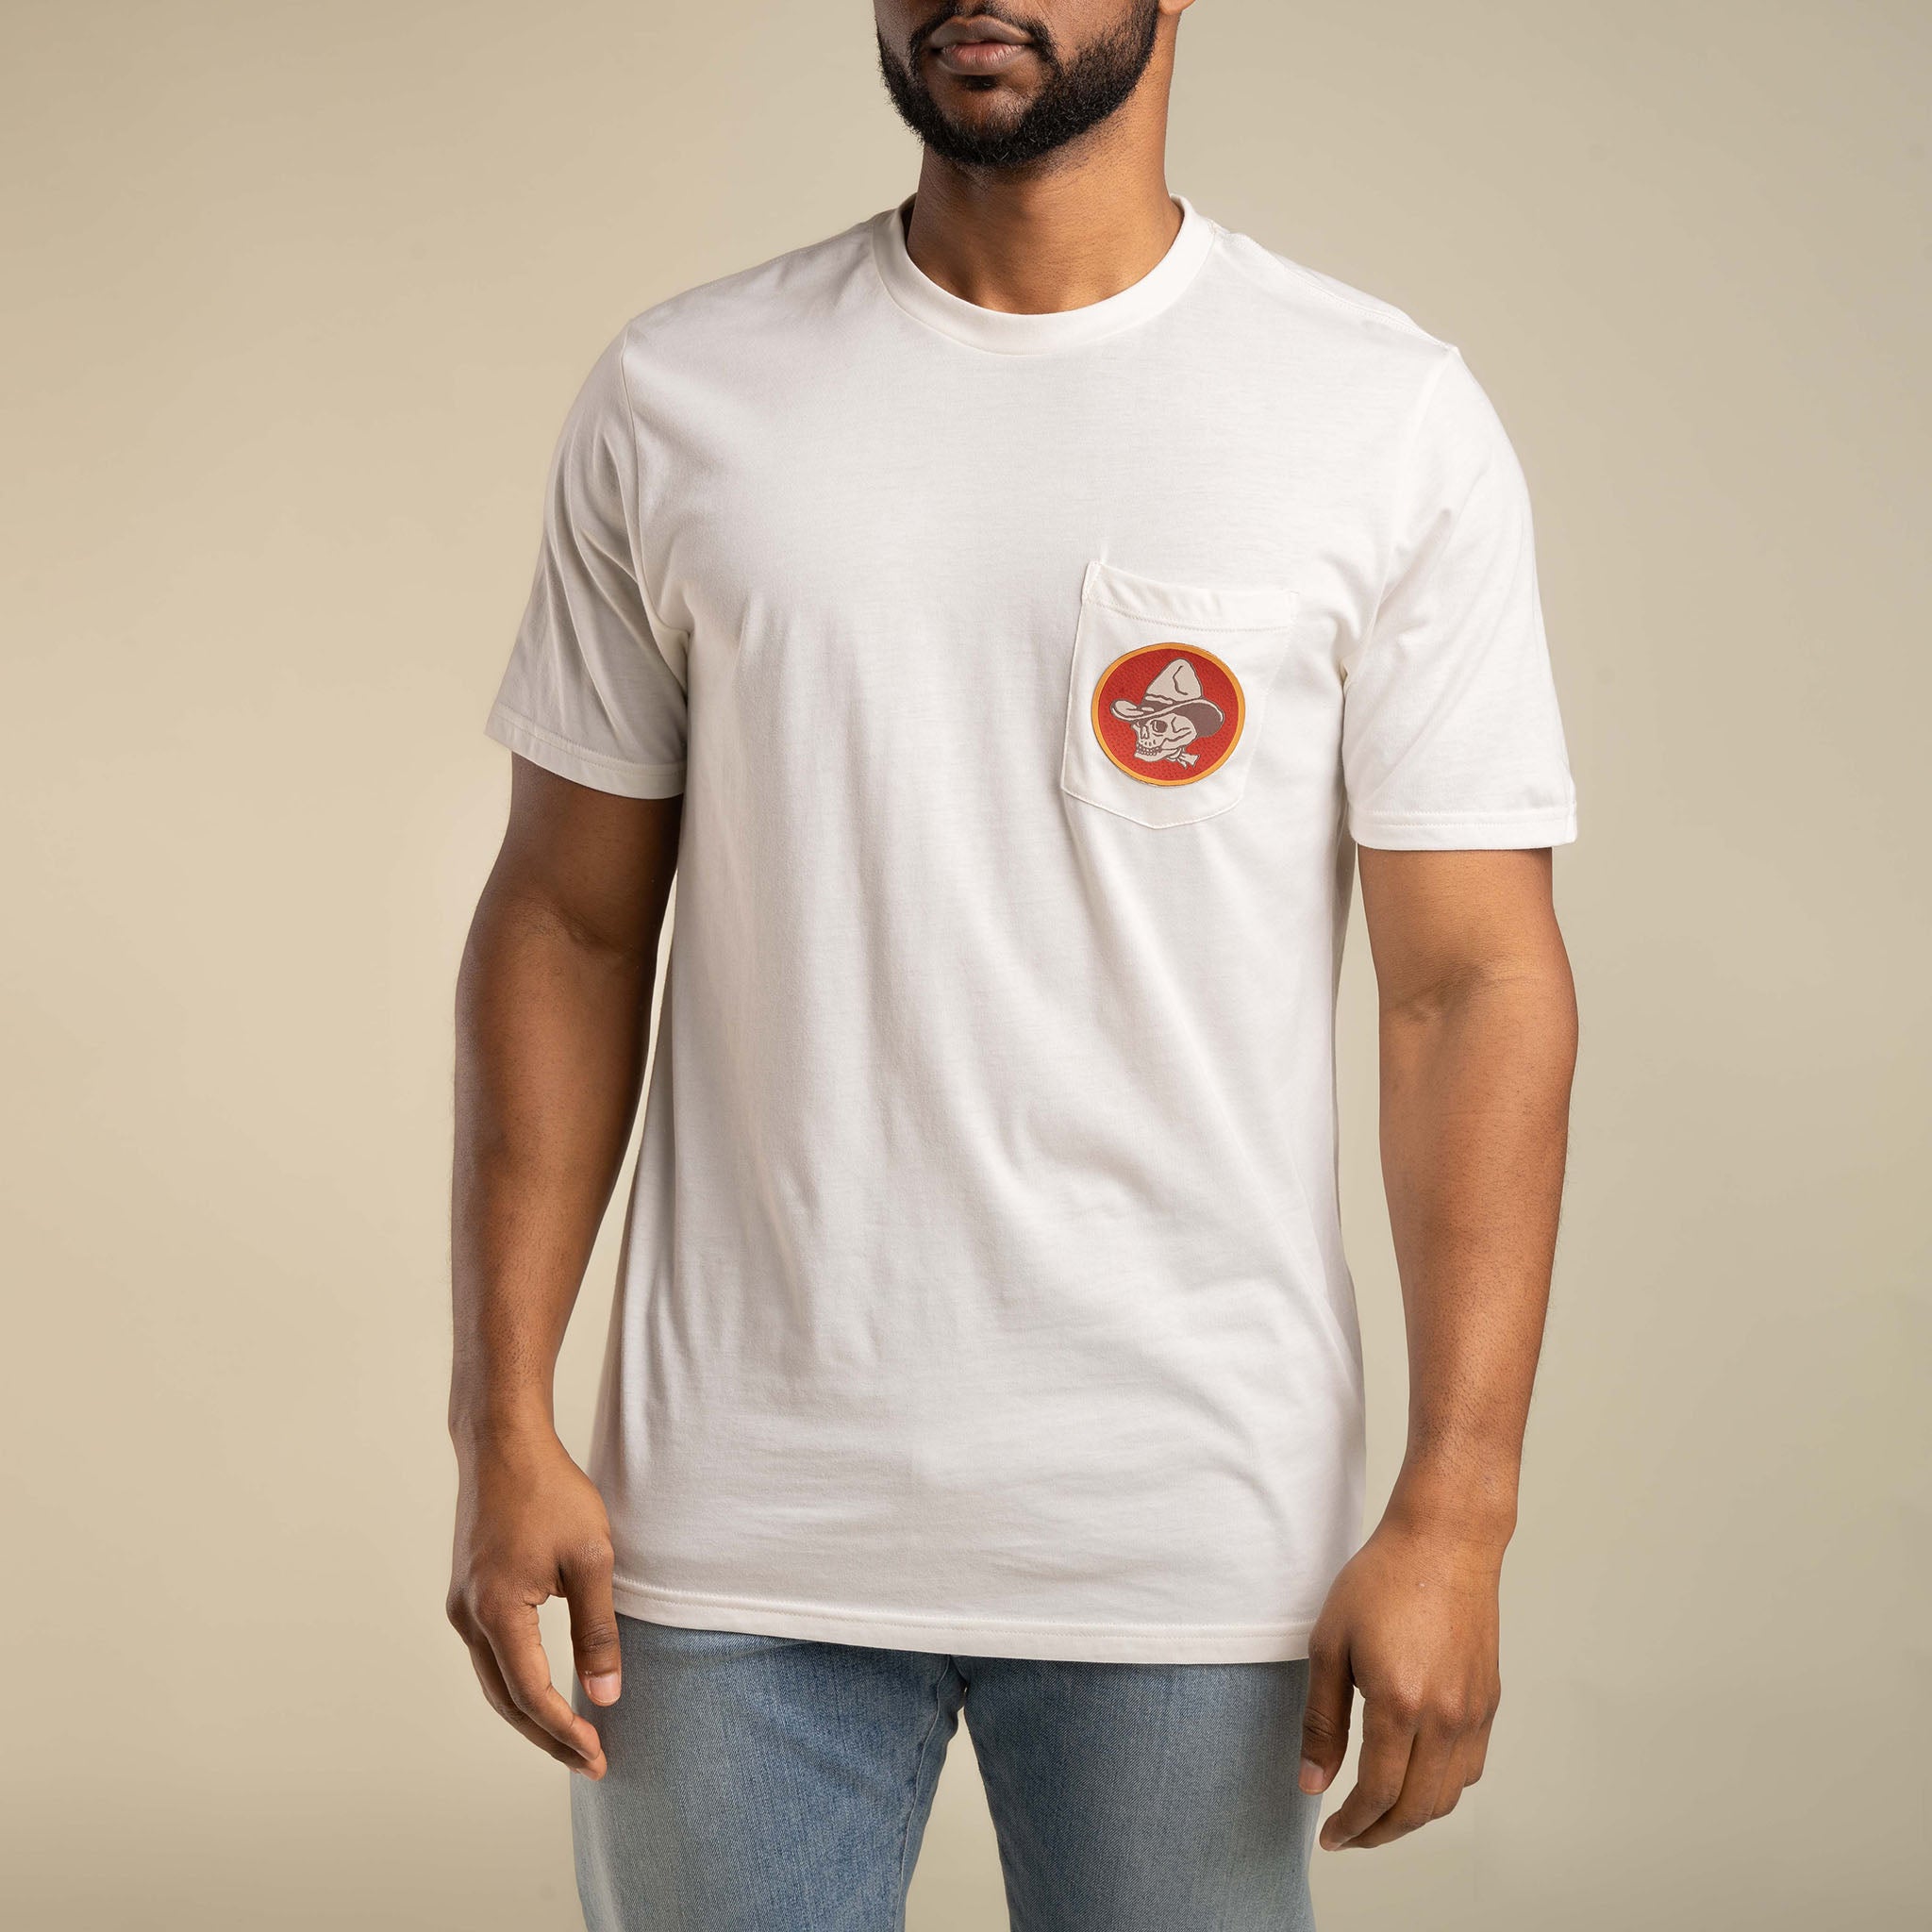 Murrieta Pocket T-Shirt